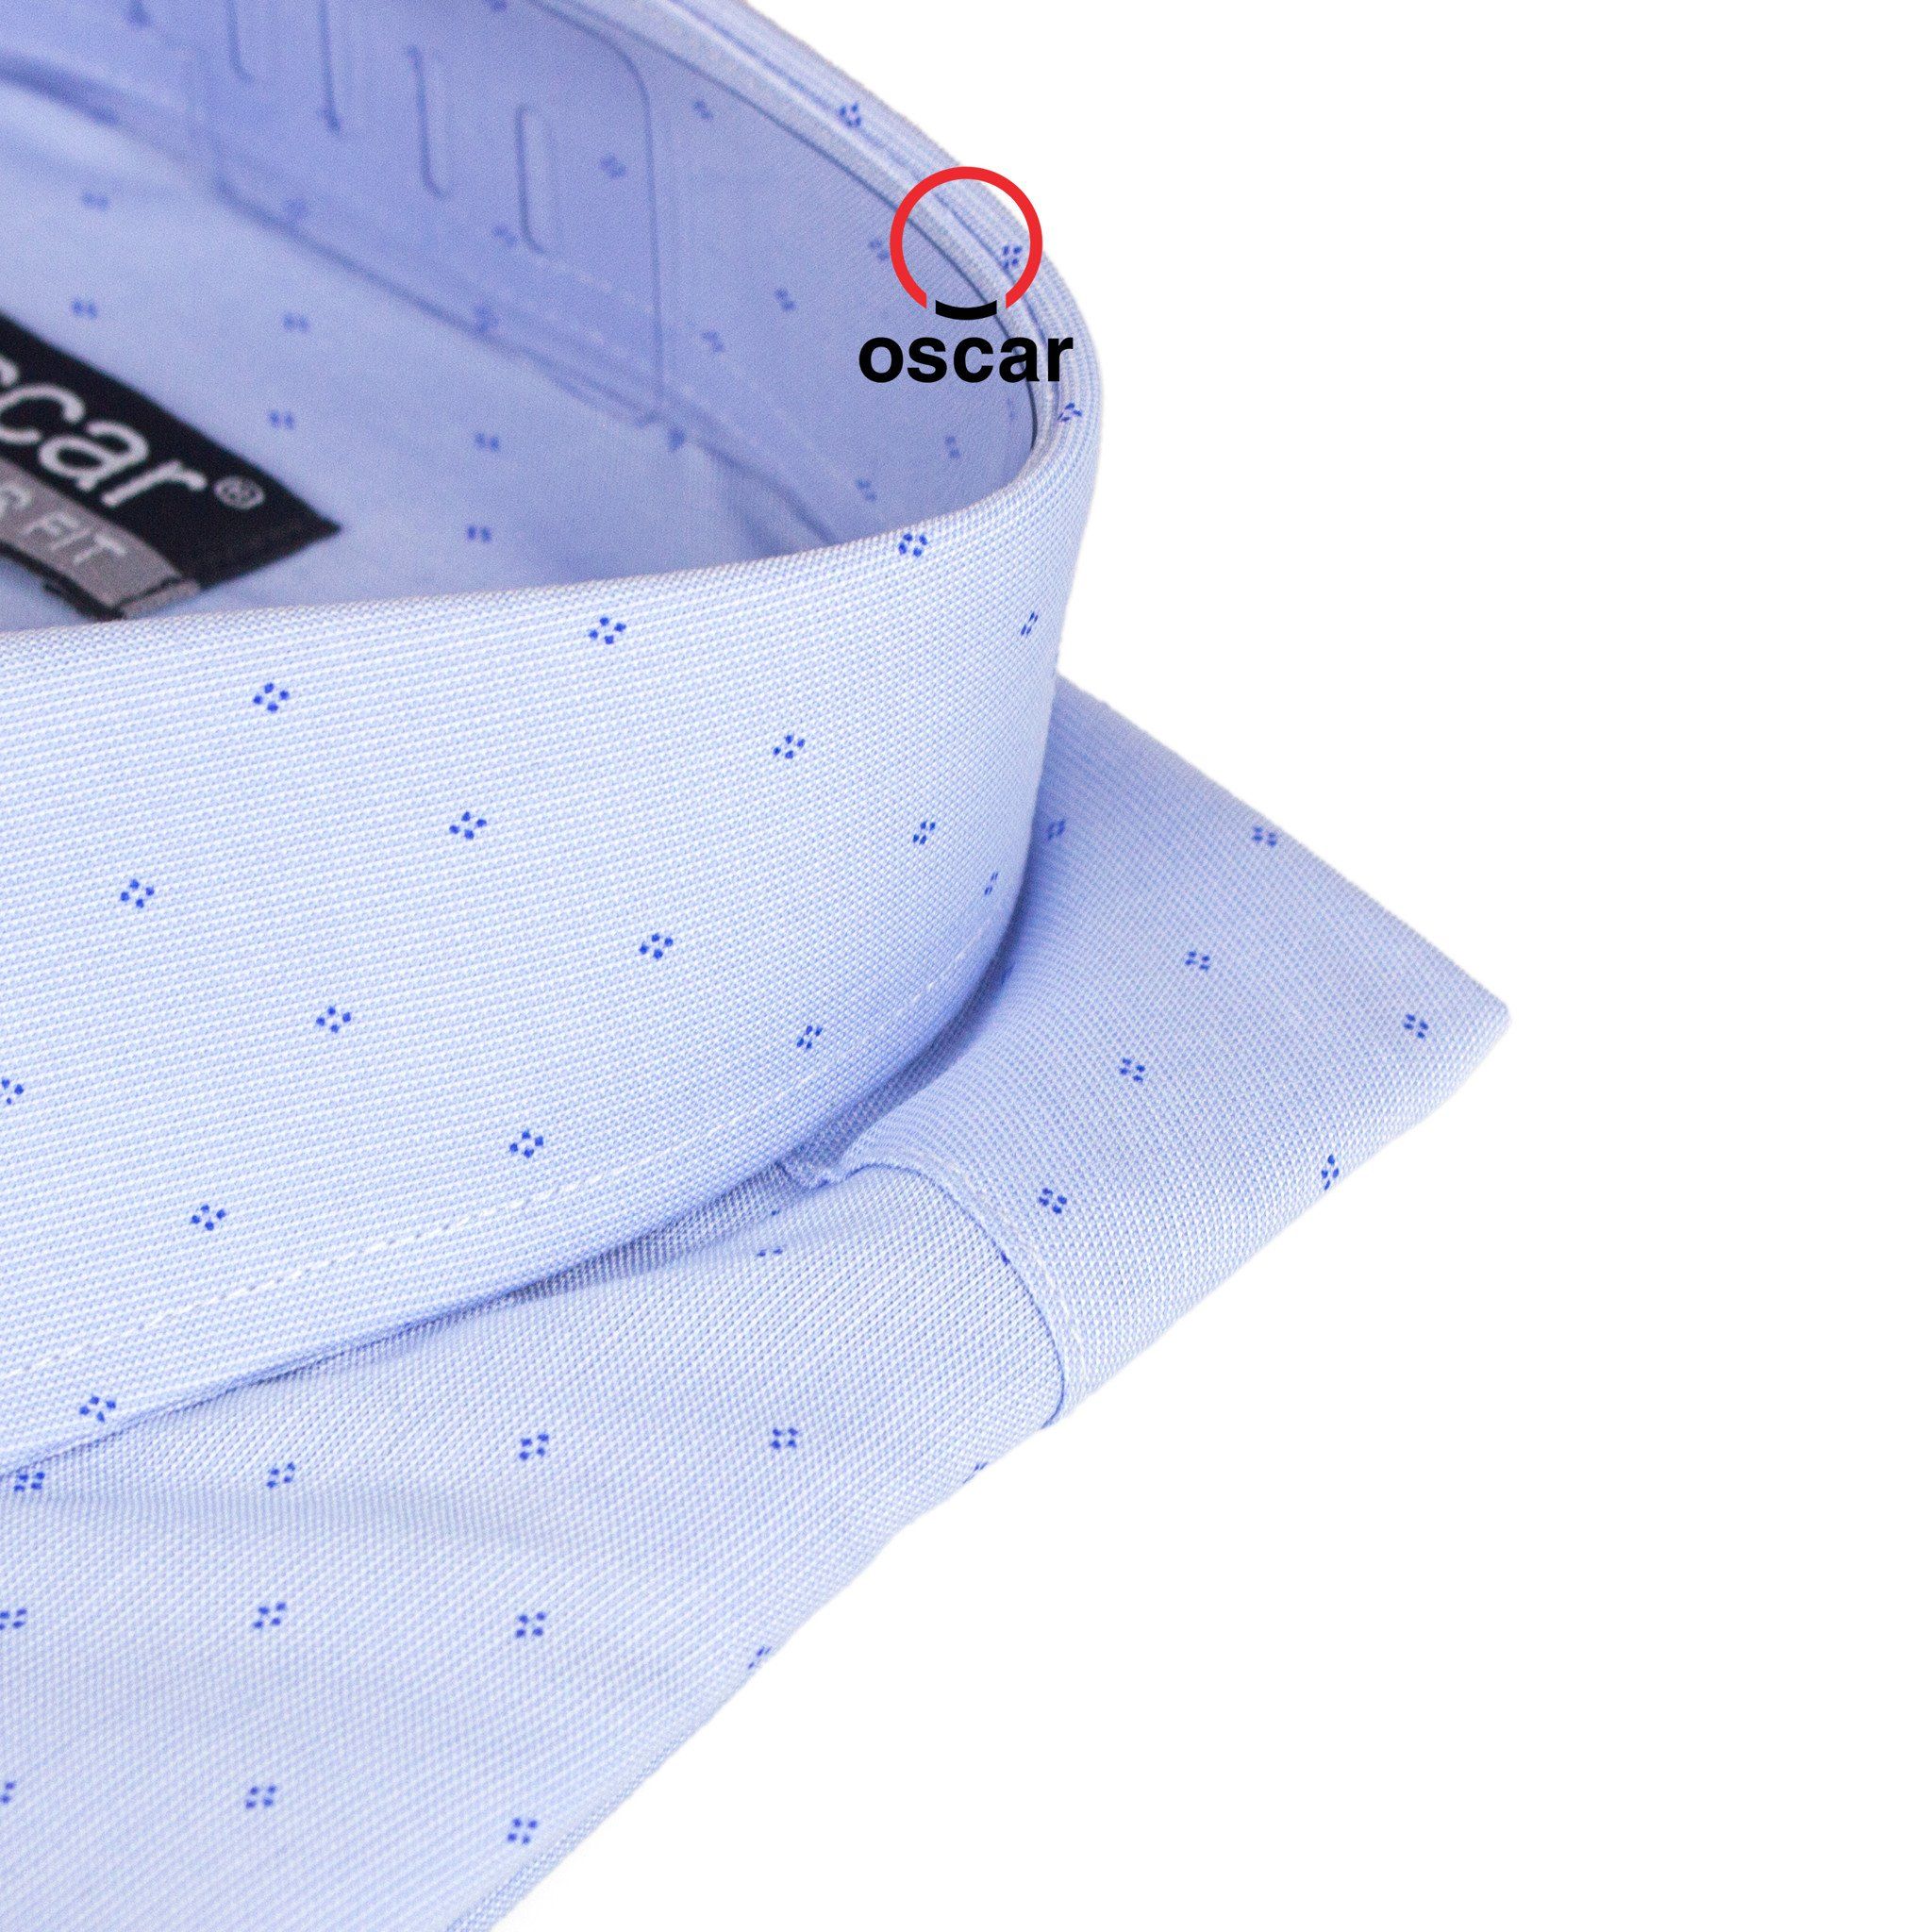 Áo sơ mi Oscar Fashion có chất liệu 100% cotton